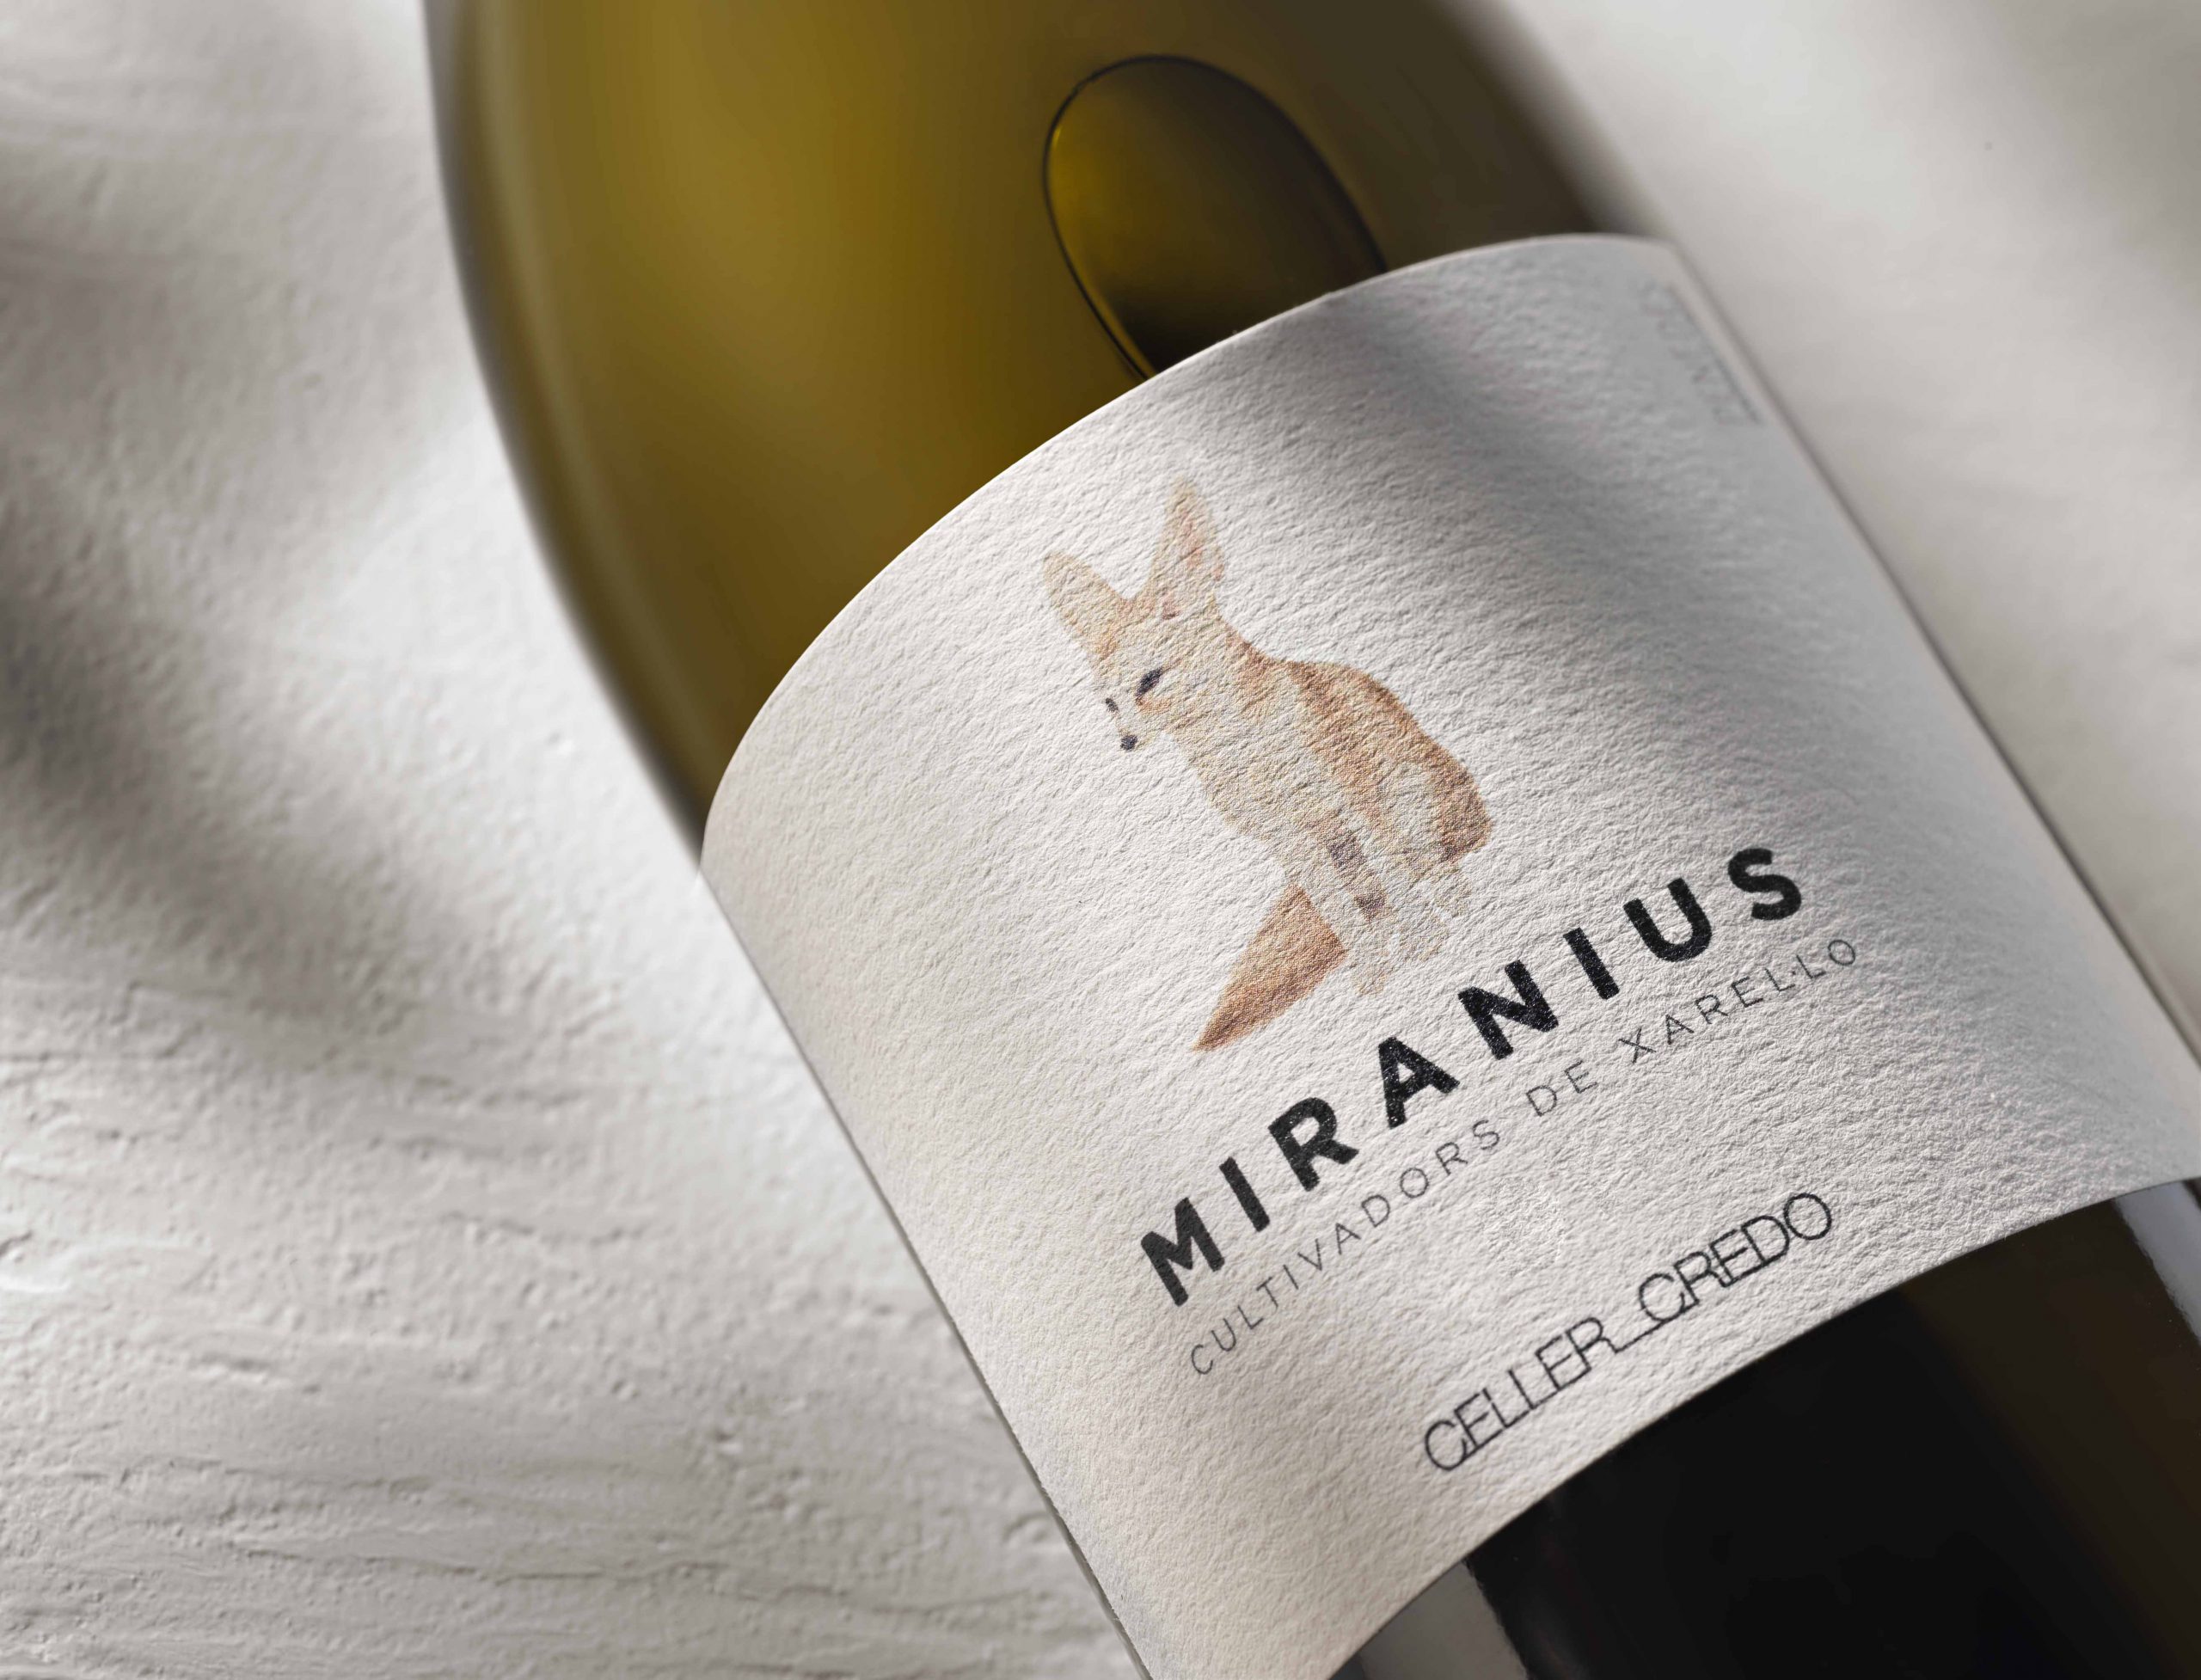 Miranius de Celler Credo és un vi ecològic 100% xarel·lo